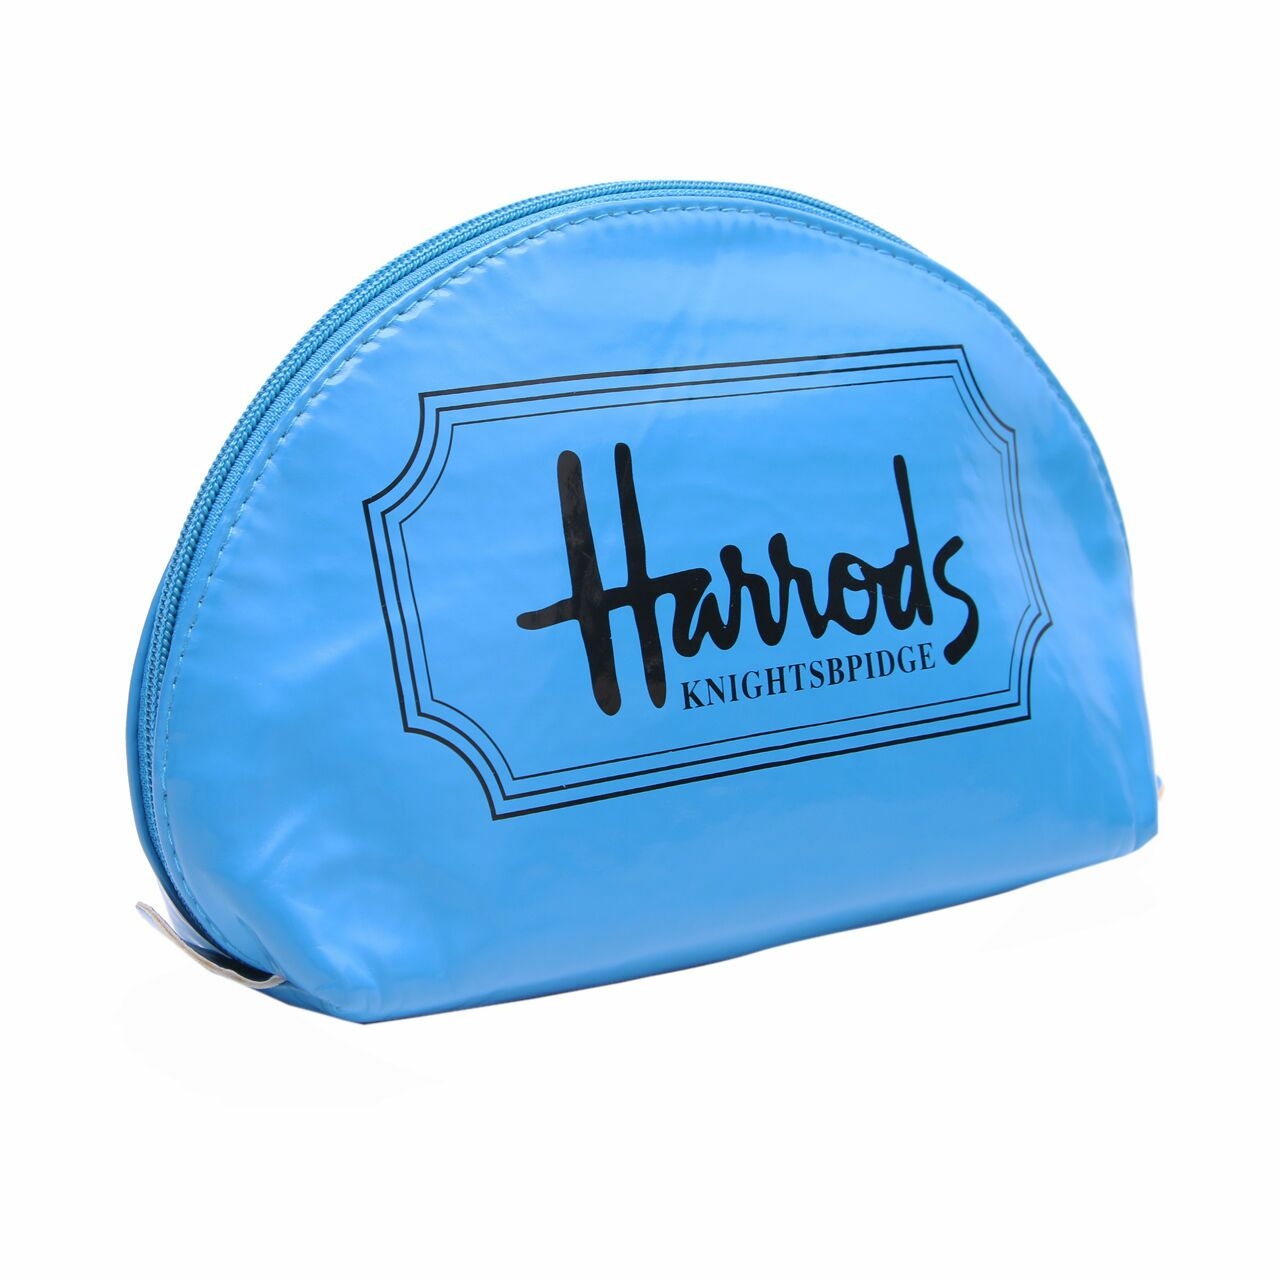 Harrods Blue Pouch